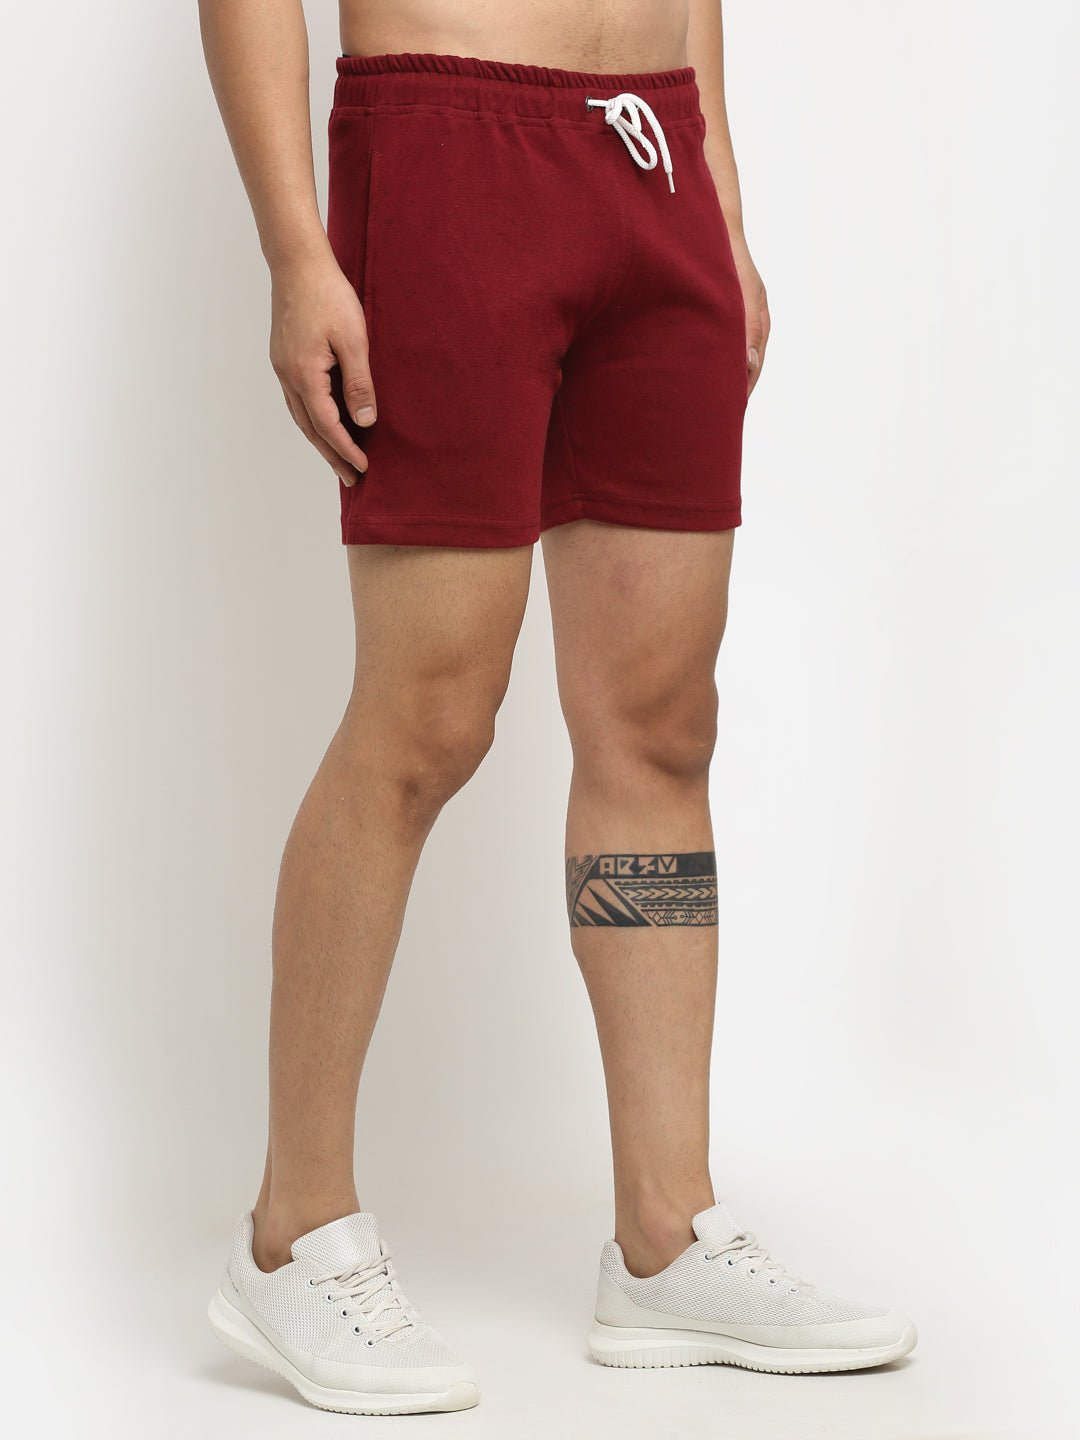 Maroon Shorts - clubyork